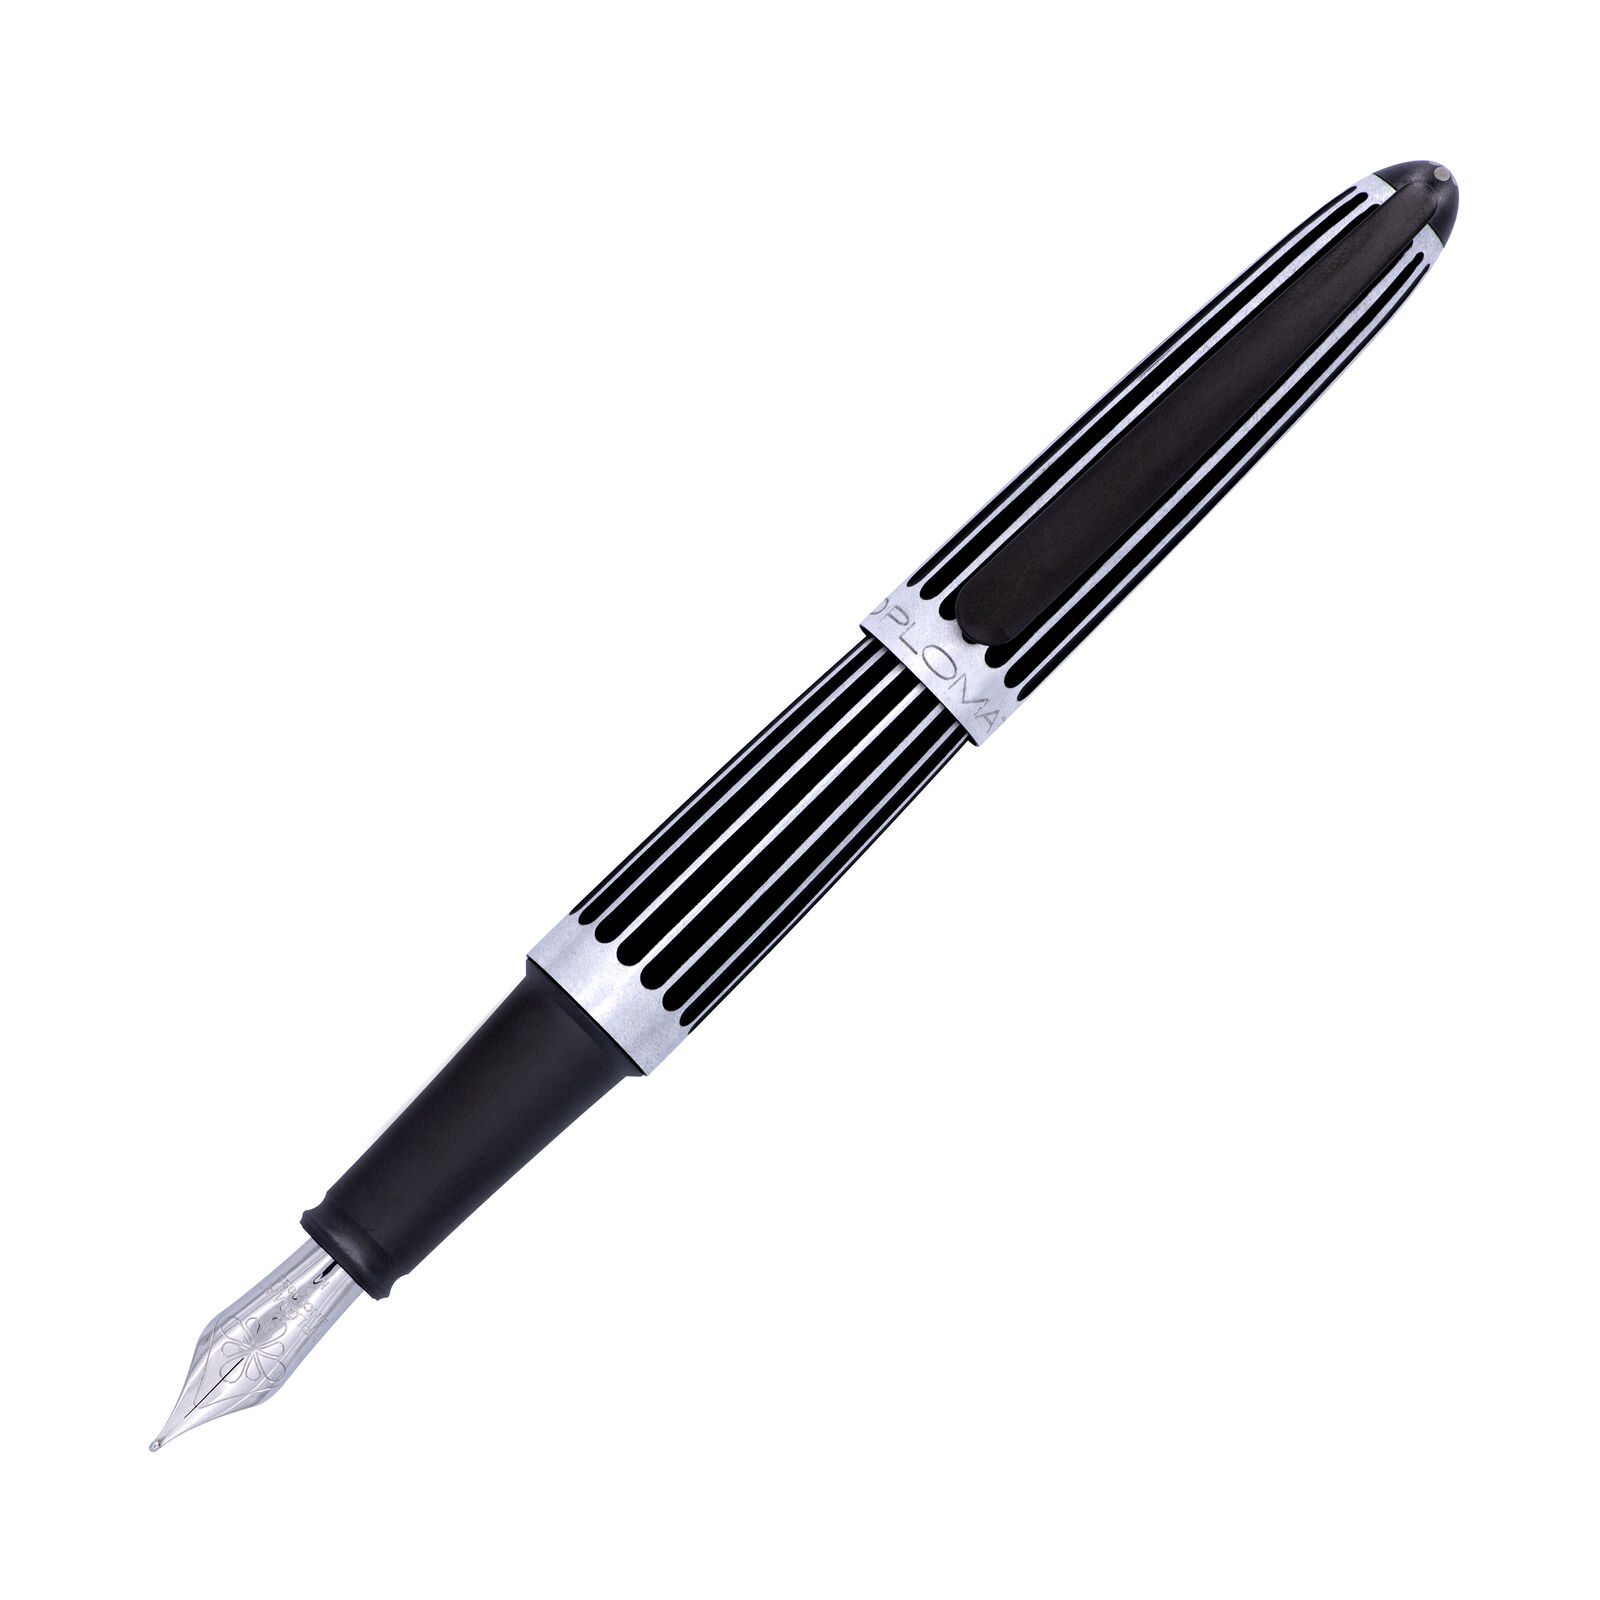 Diplomat Aero Fountain Pen in Stripes Black - Medium Point - NEW in Original Box